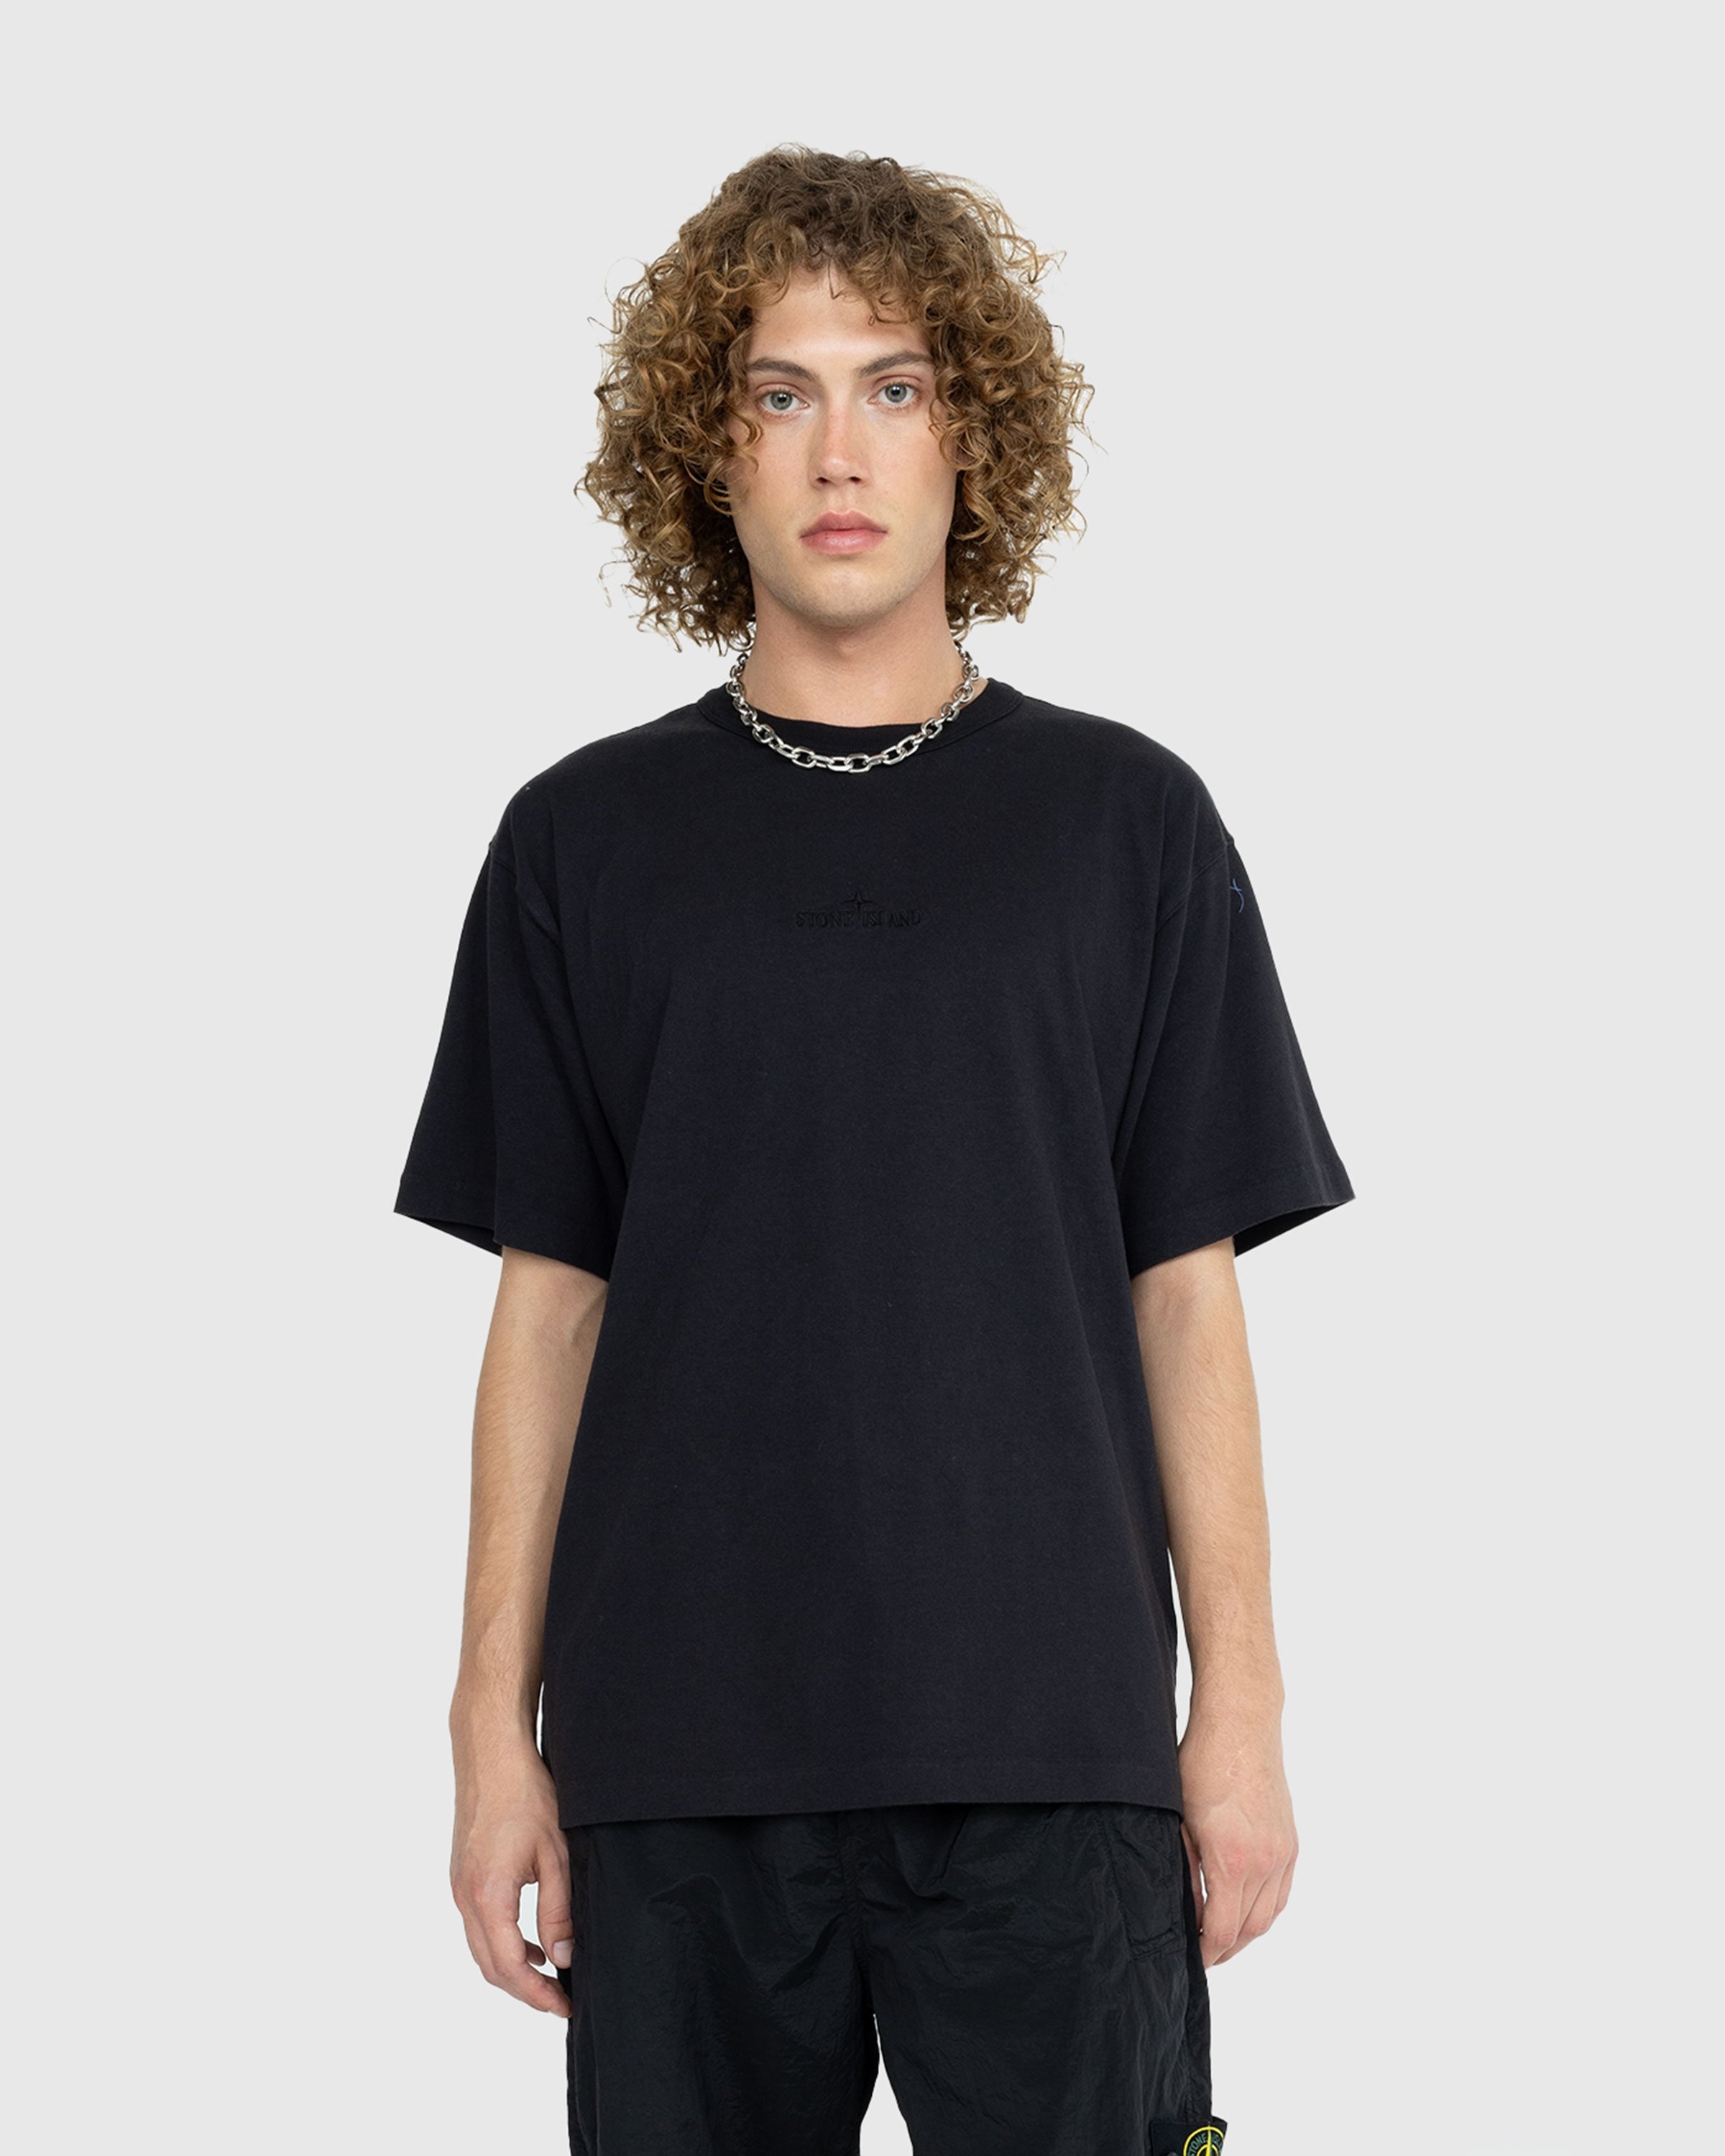 Stone Island – Garment-Dyed Logo T-Shirt Black | Highsnobiety Shop